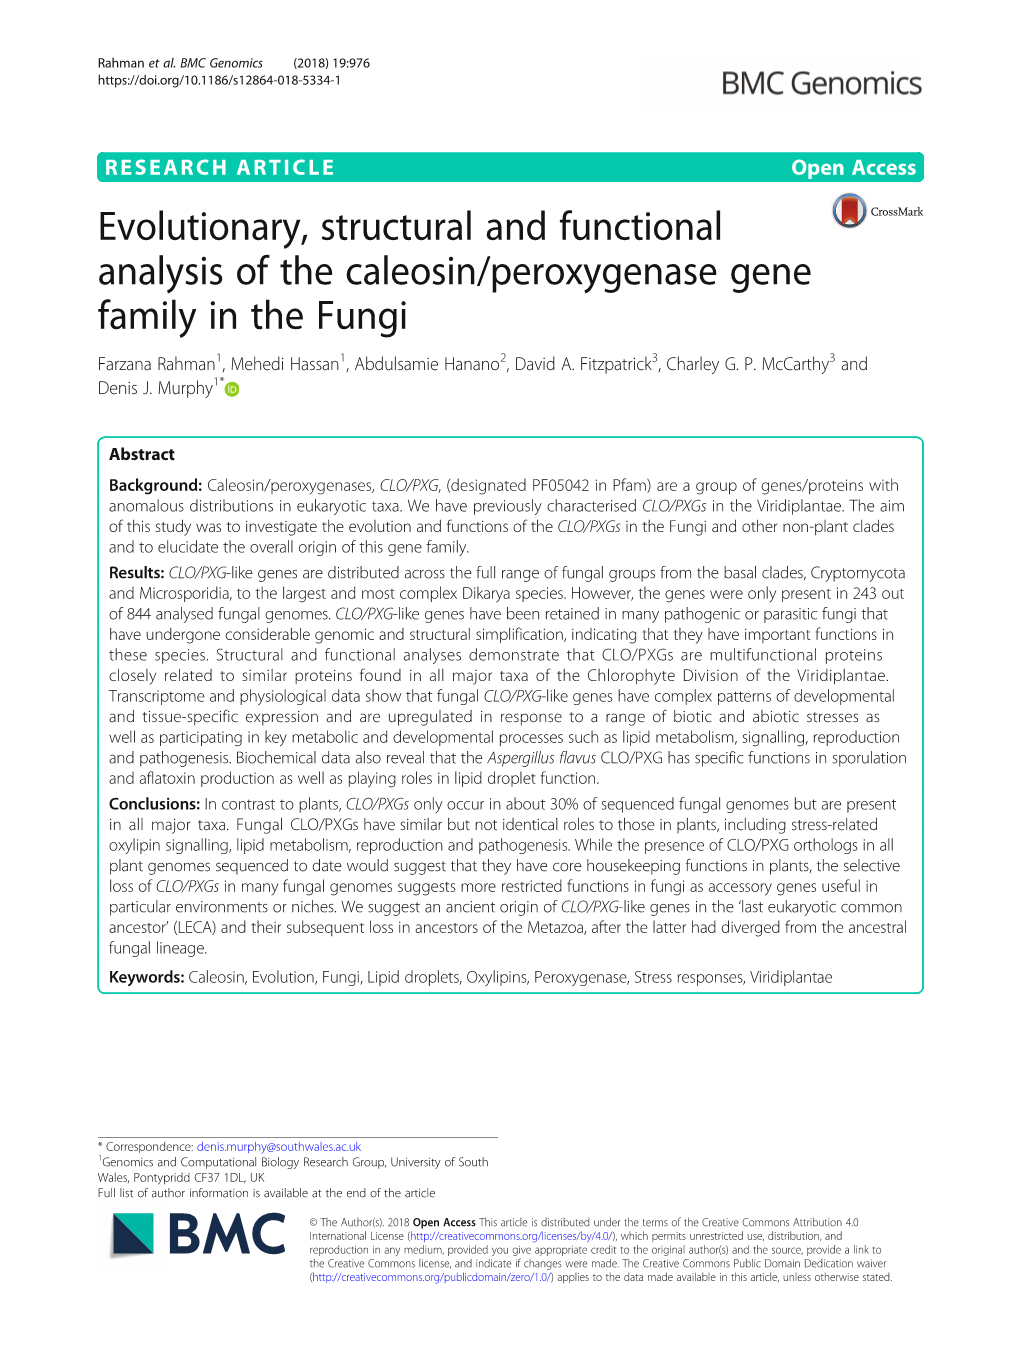 Evolutionary, Structural and Functional Analysis of the Caleosin/Peroxygenase Gene Family in the Fungi Farzana Rahman1, Mehedi Hassan1, Abdulsamie Hanano2, David A